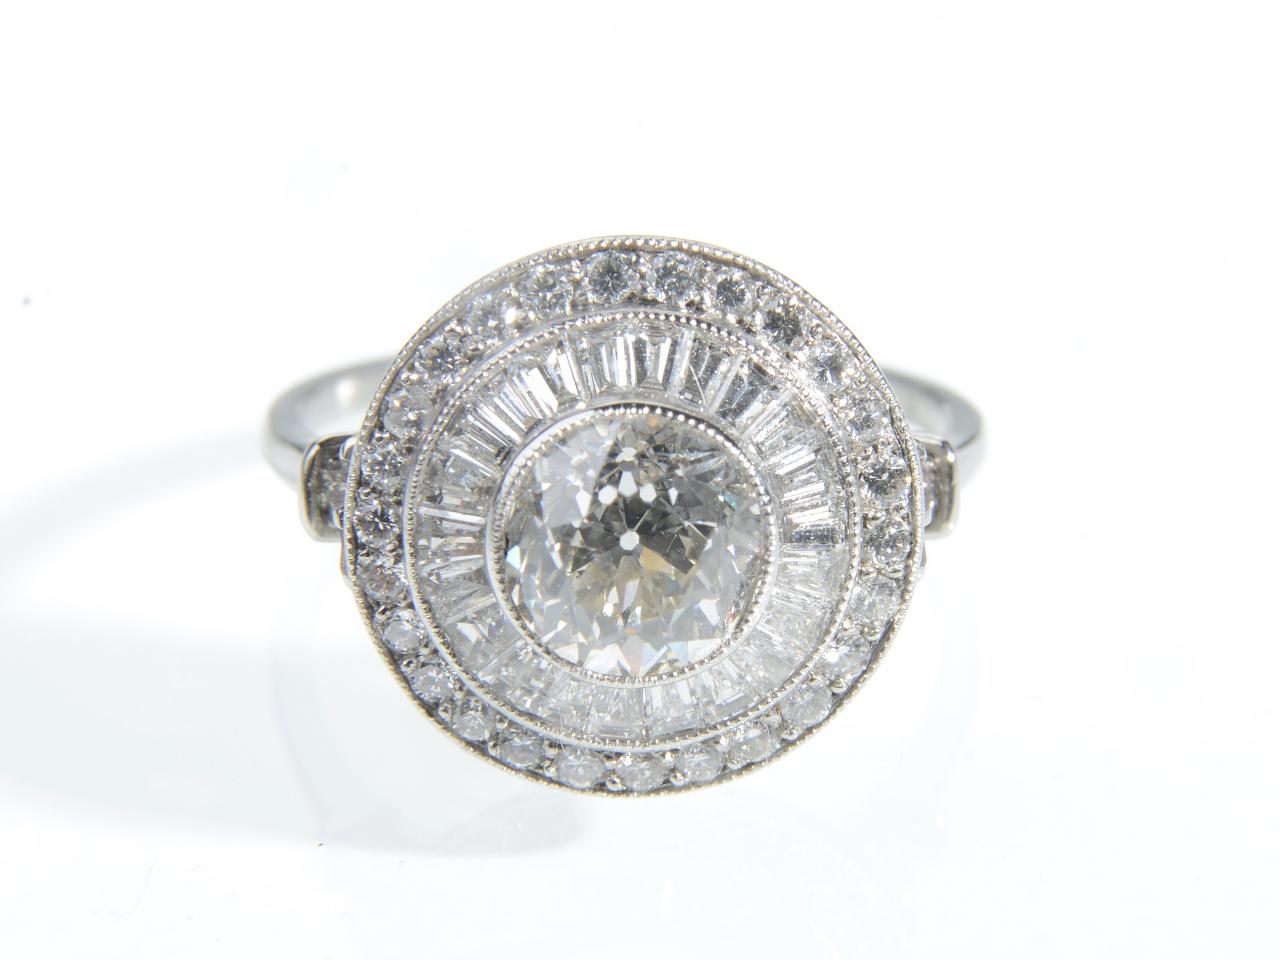 Vintage style diamond target ring in platinum